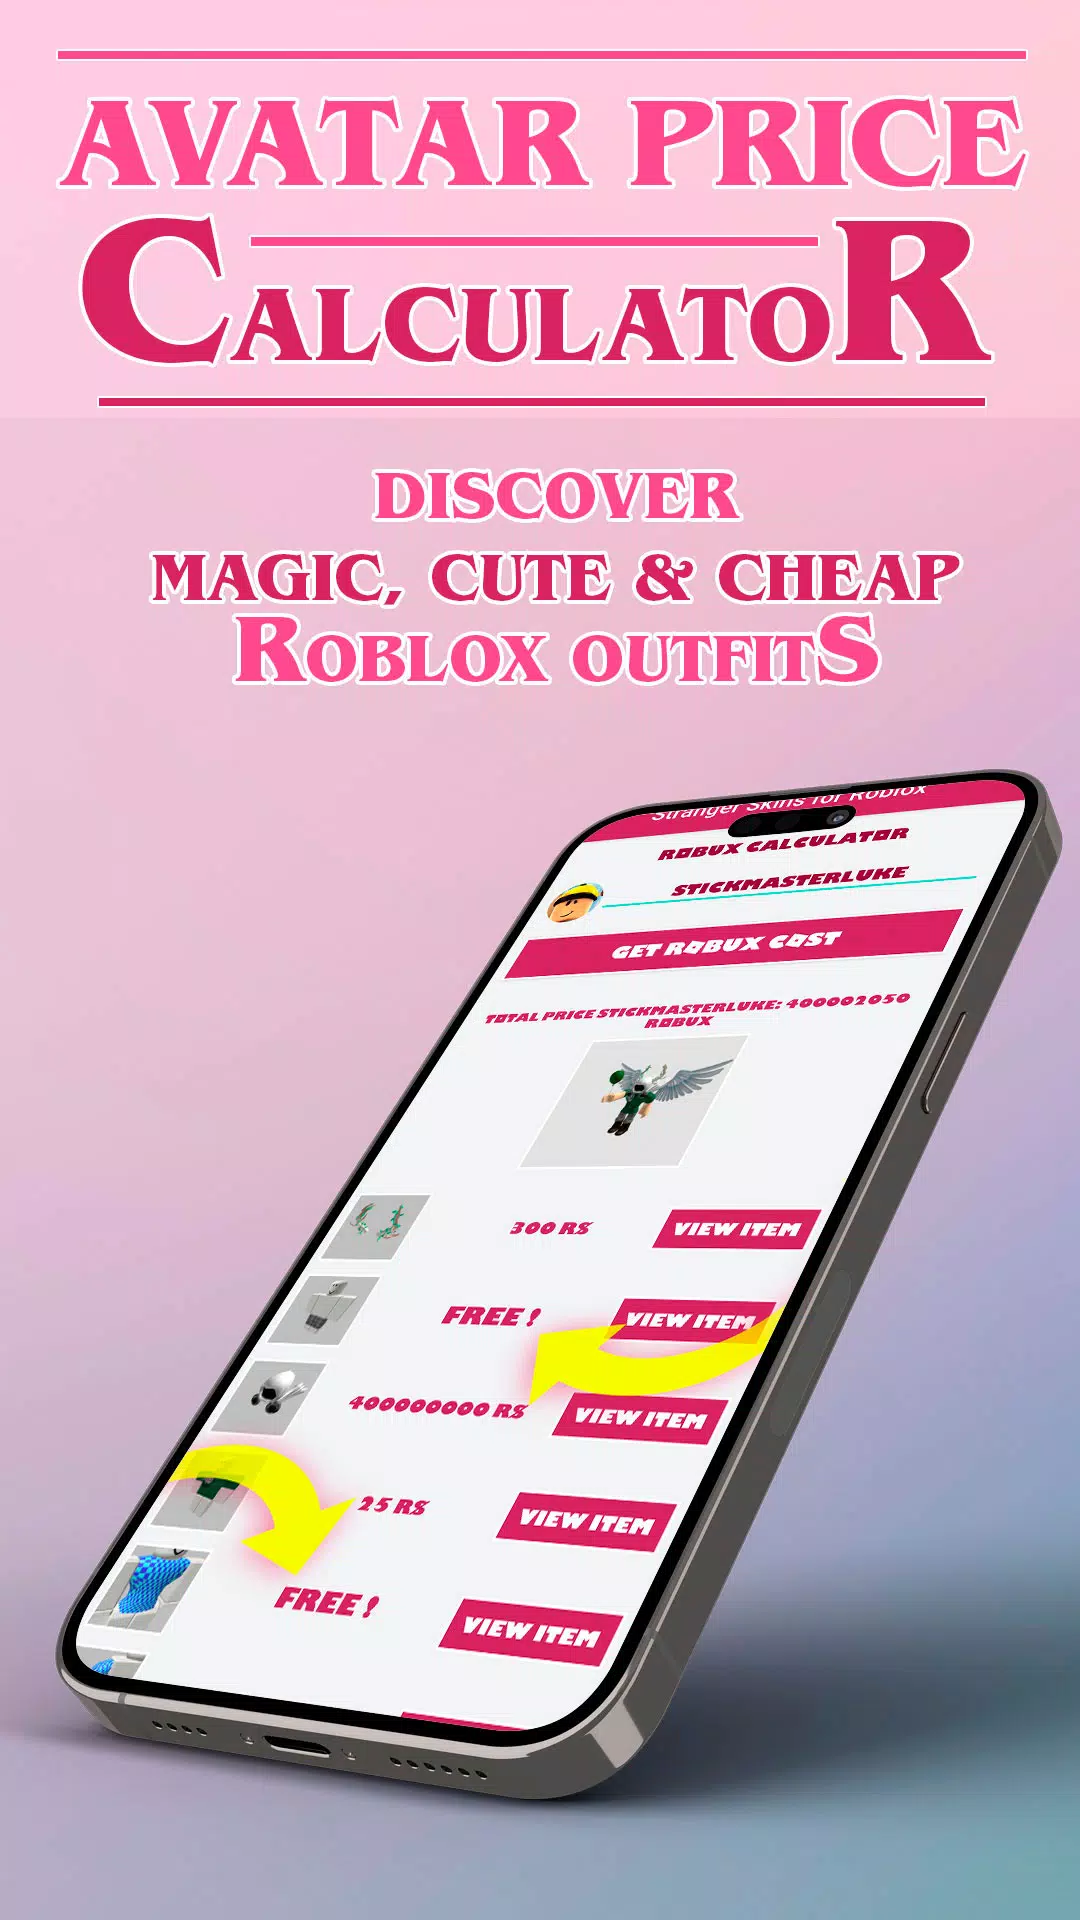 Stranger Skins for Robux for Android - Free App Download